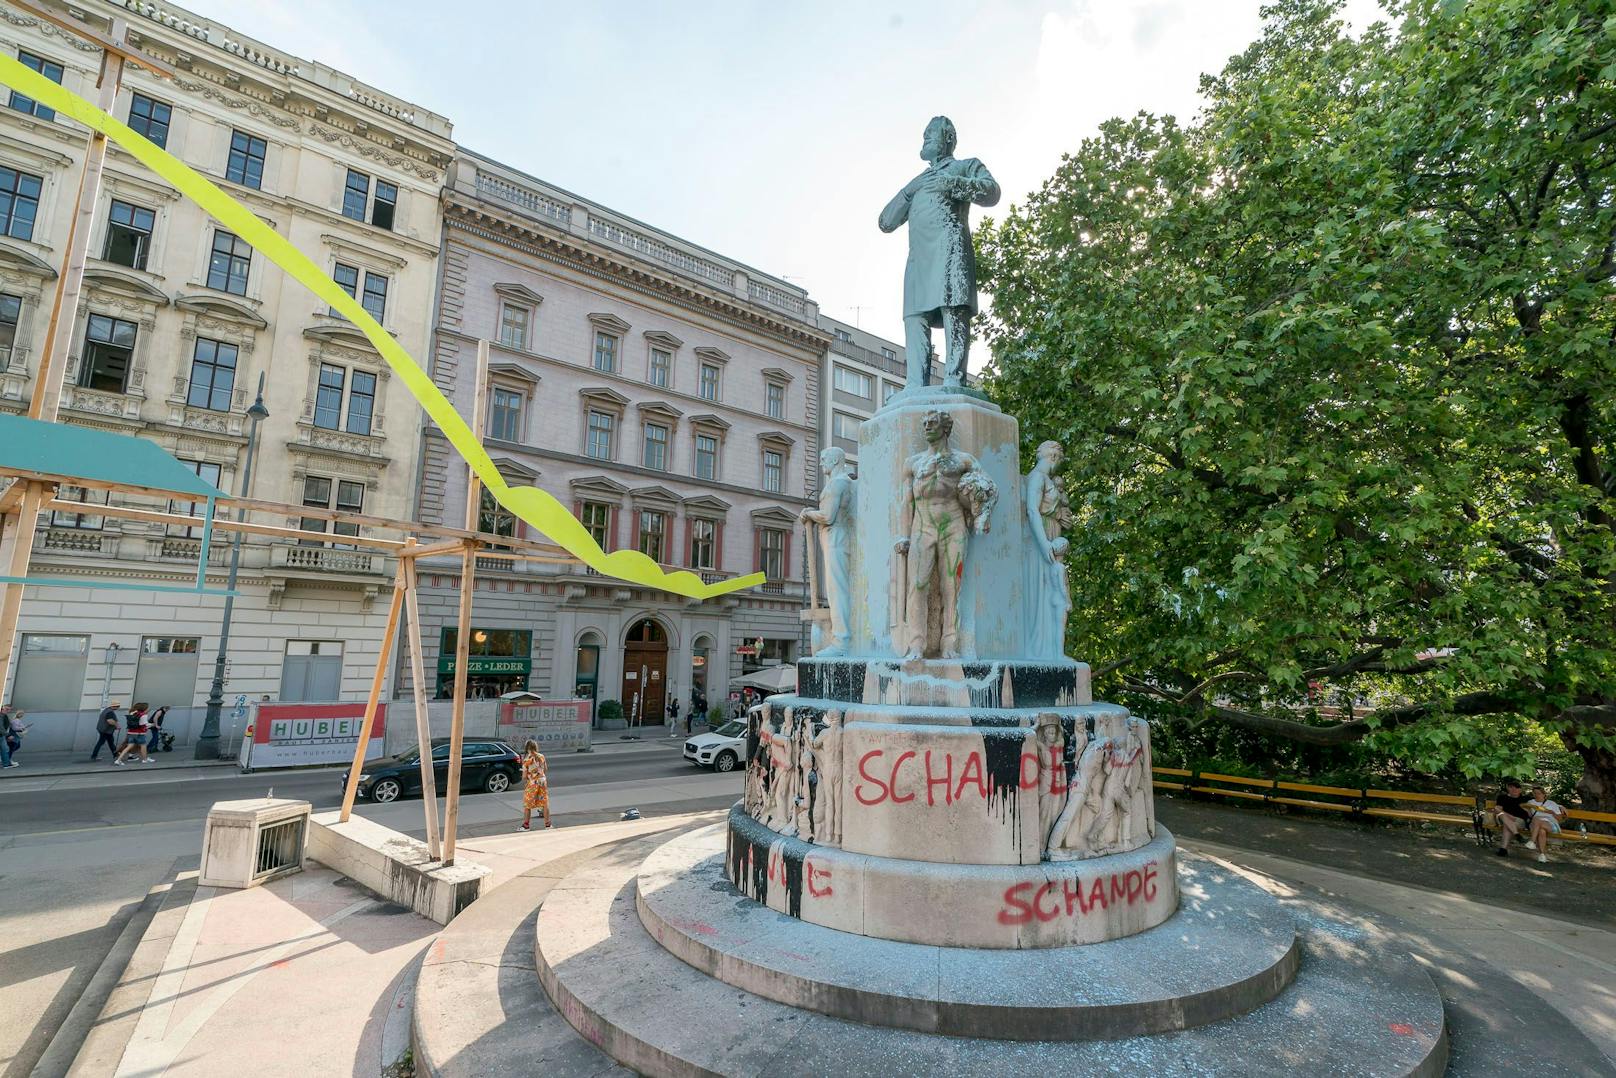 Fotos! Wien kippt Denkmal – das kostet halbe Million €